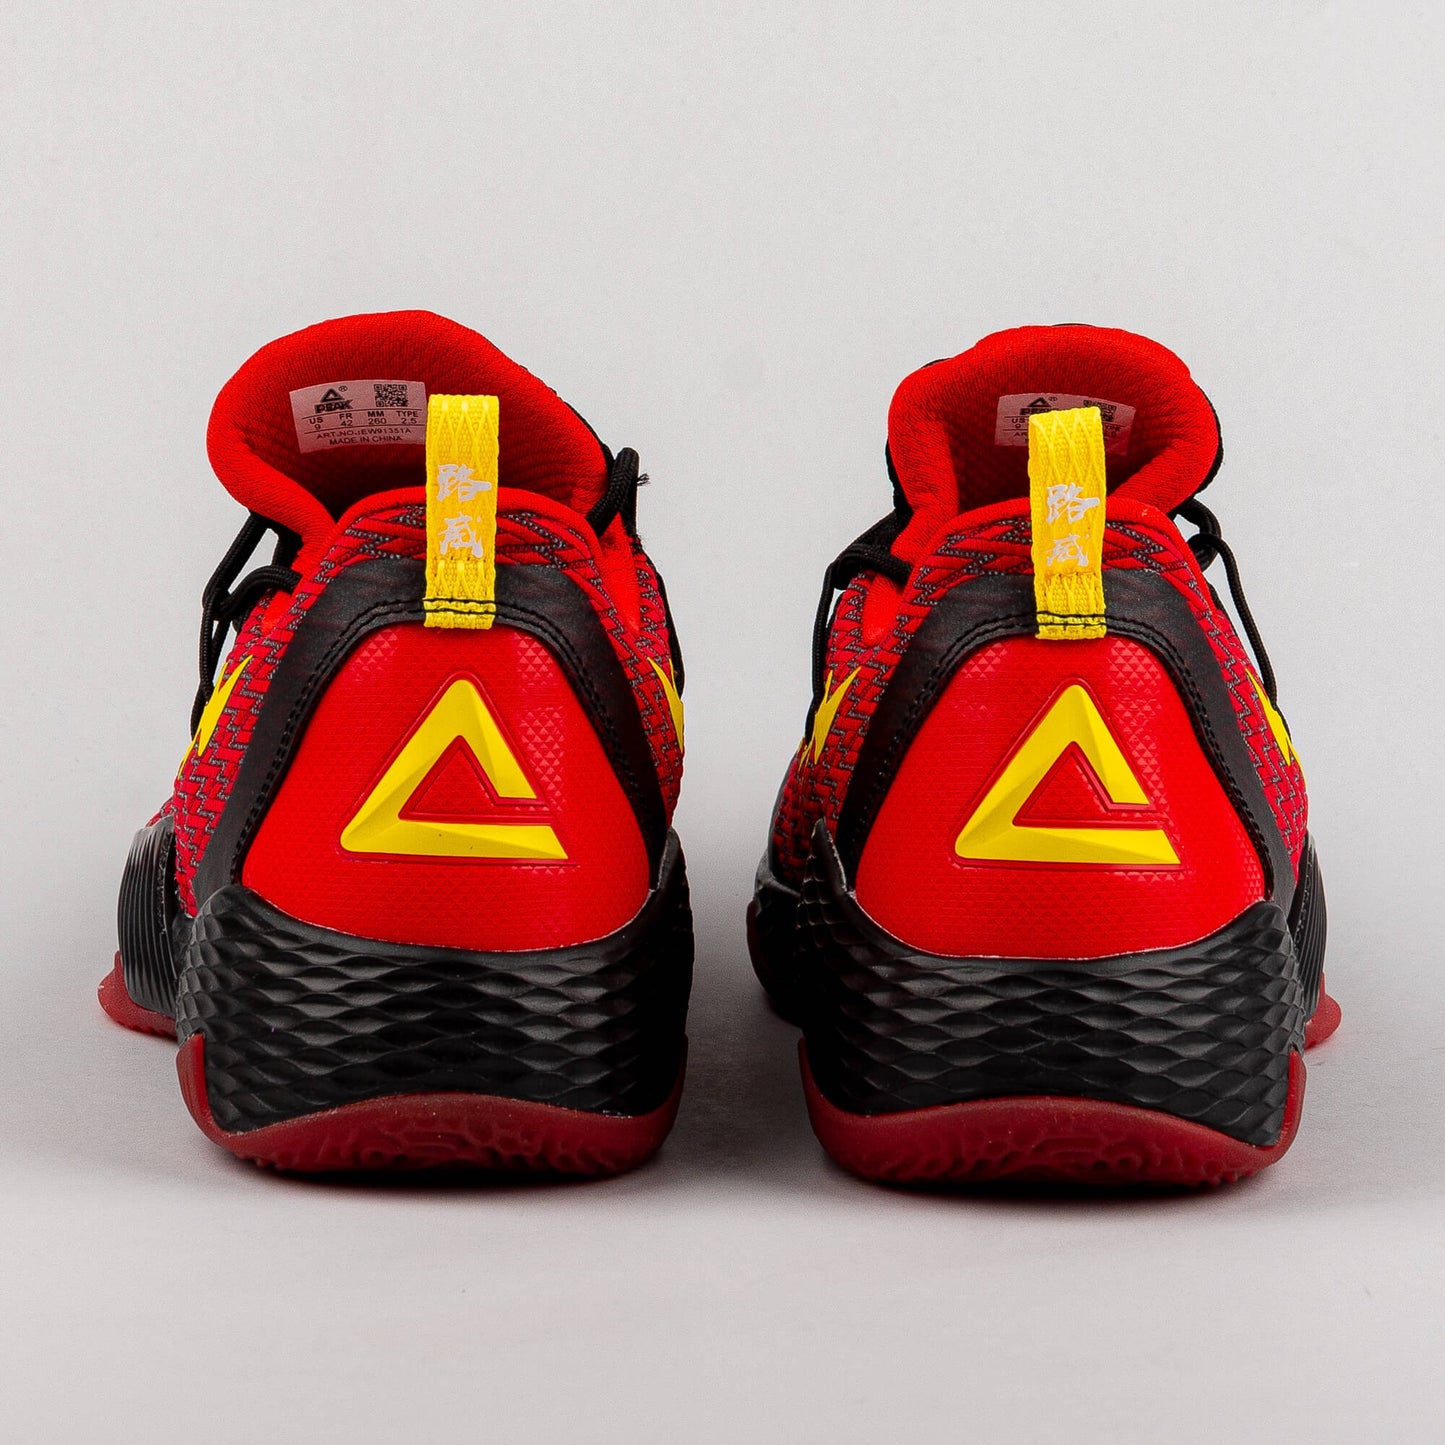 Peak Lou Williams Signature Basketball Shoes Lighting Red/Black